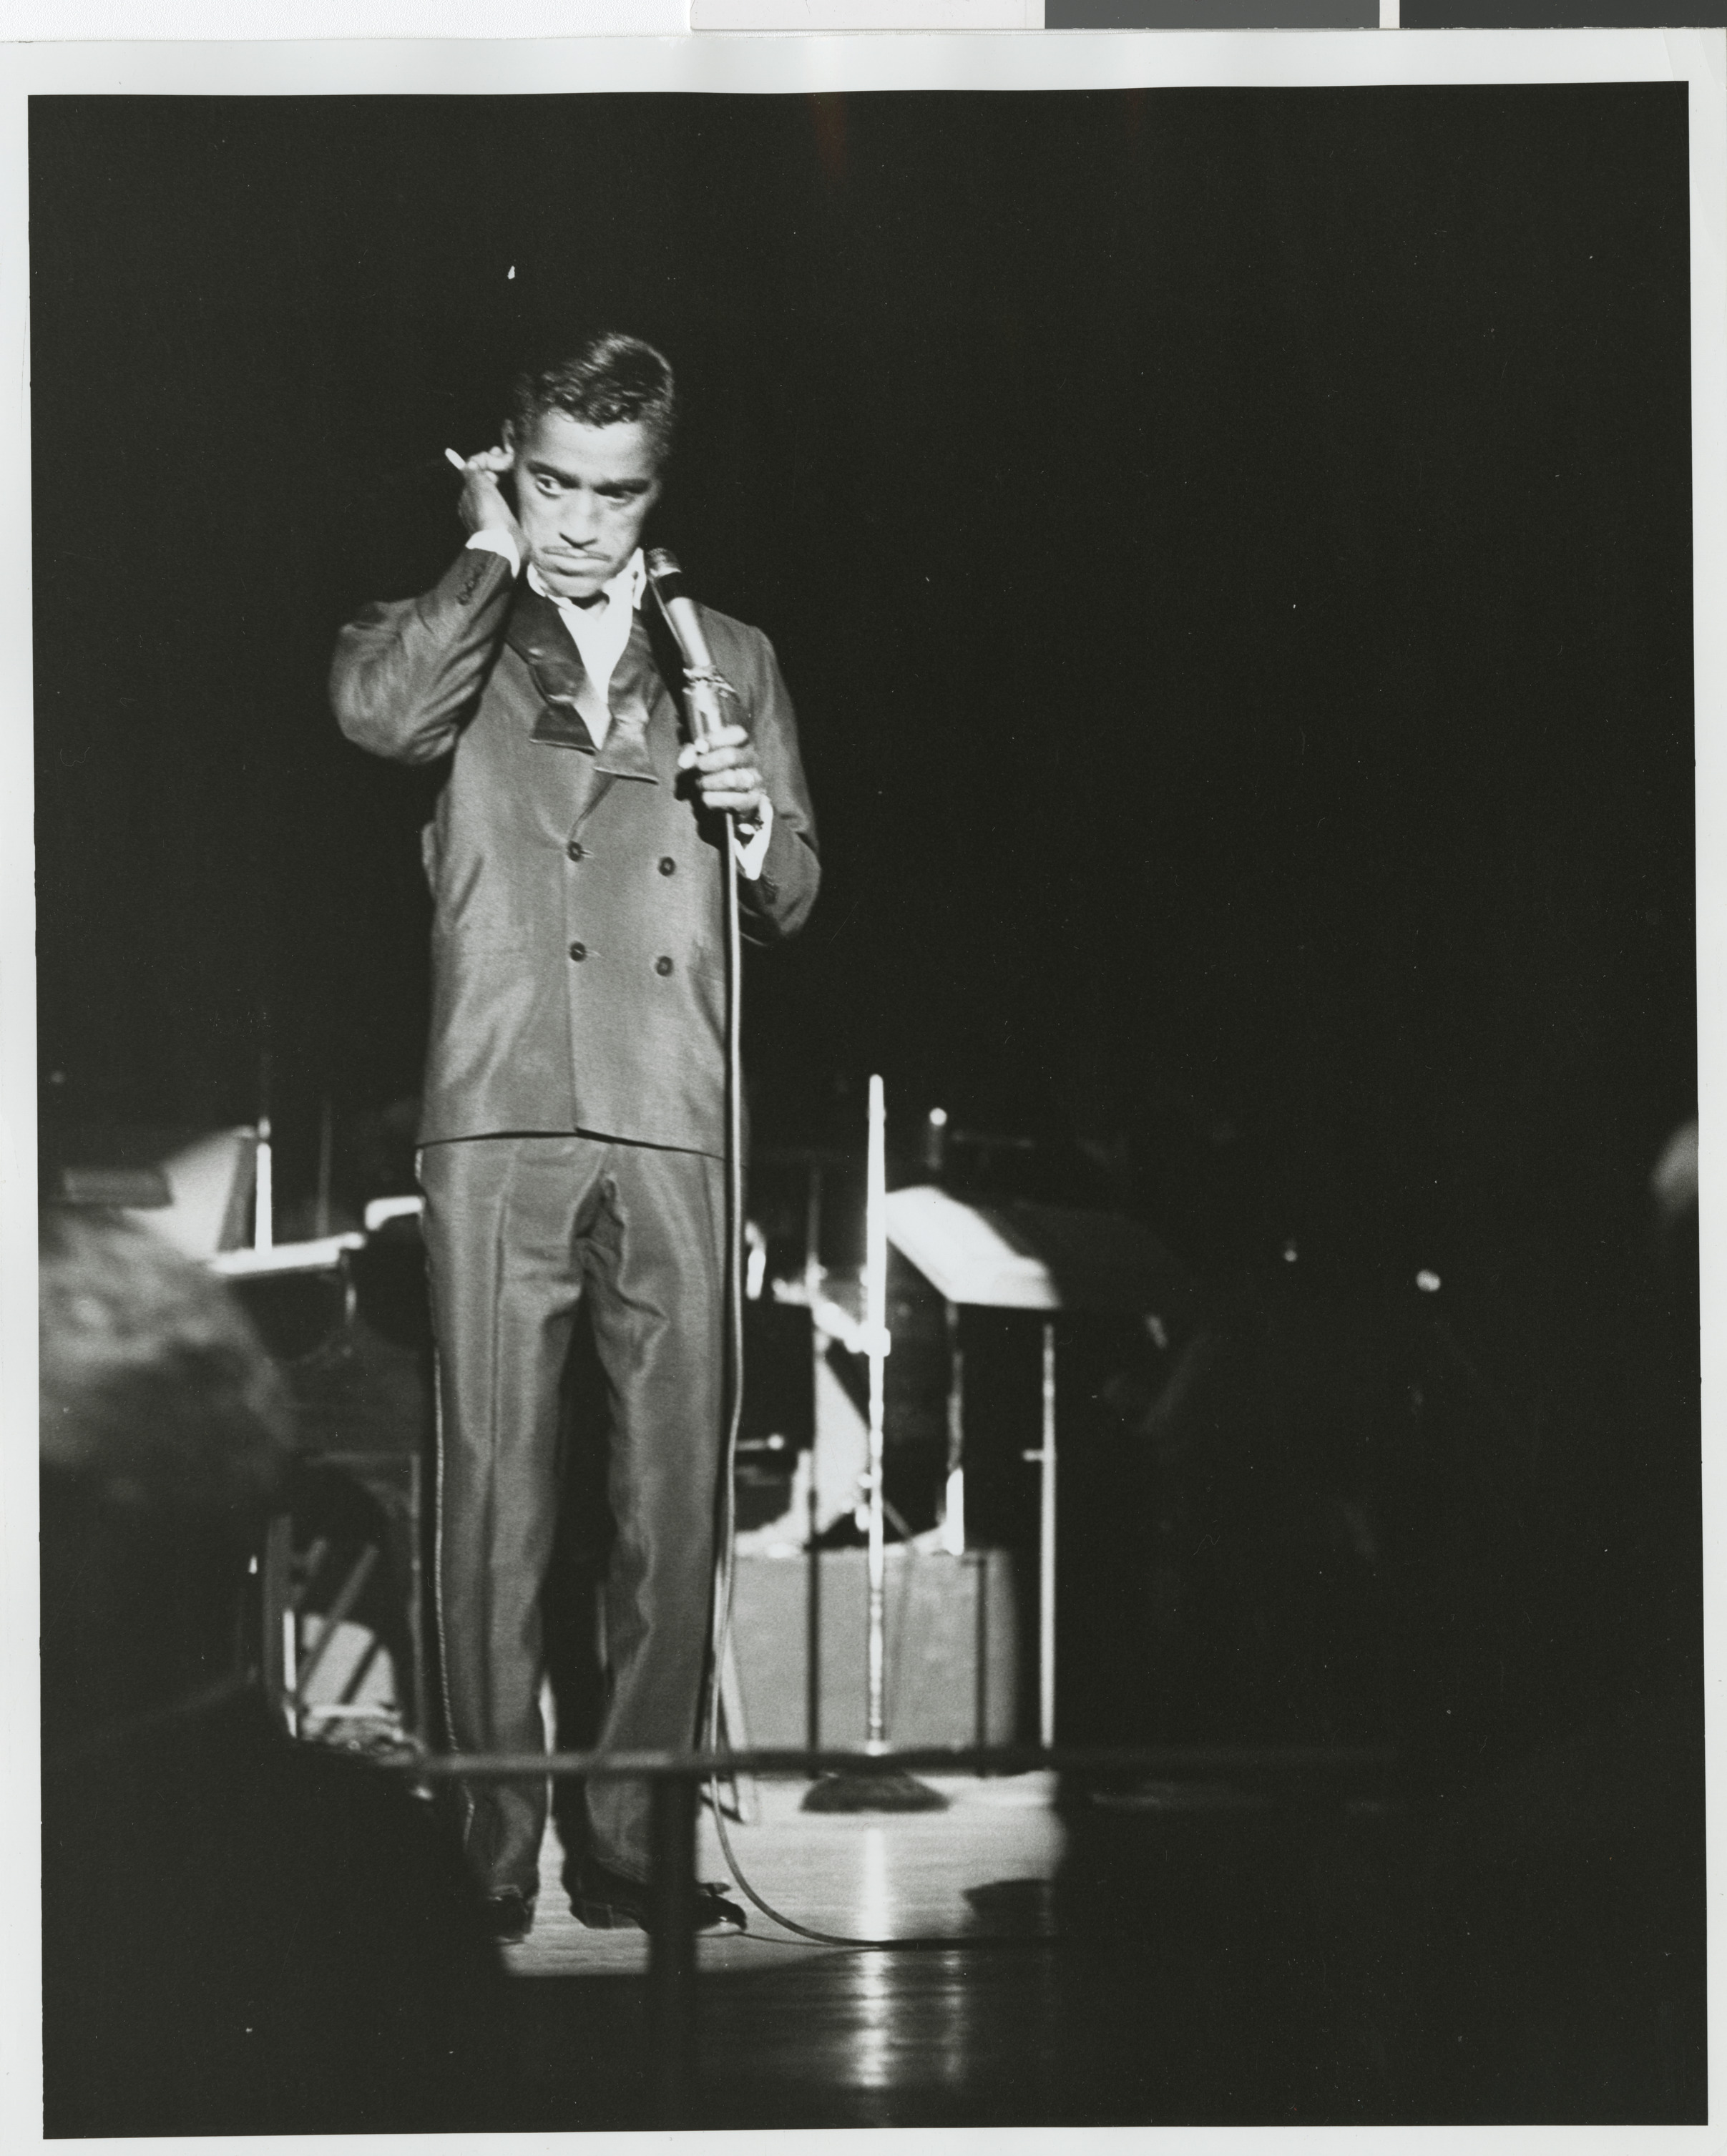 Sammy Davis, Jr. performing, Image 15